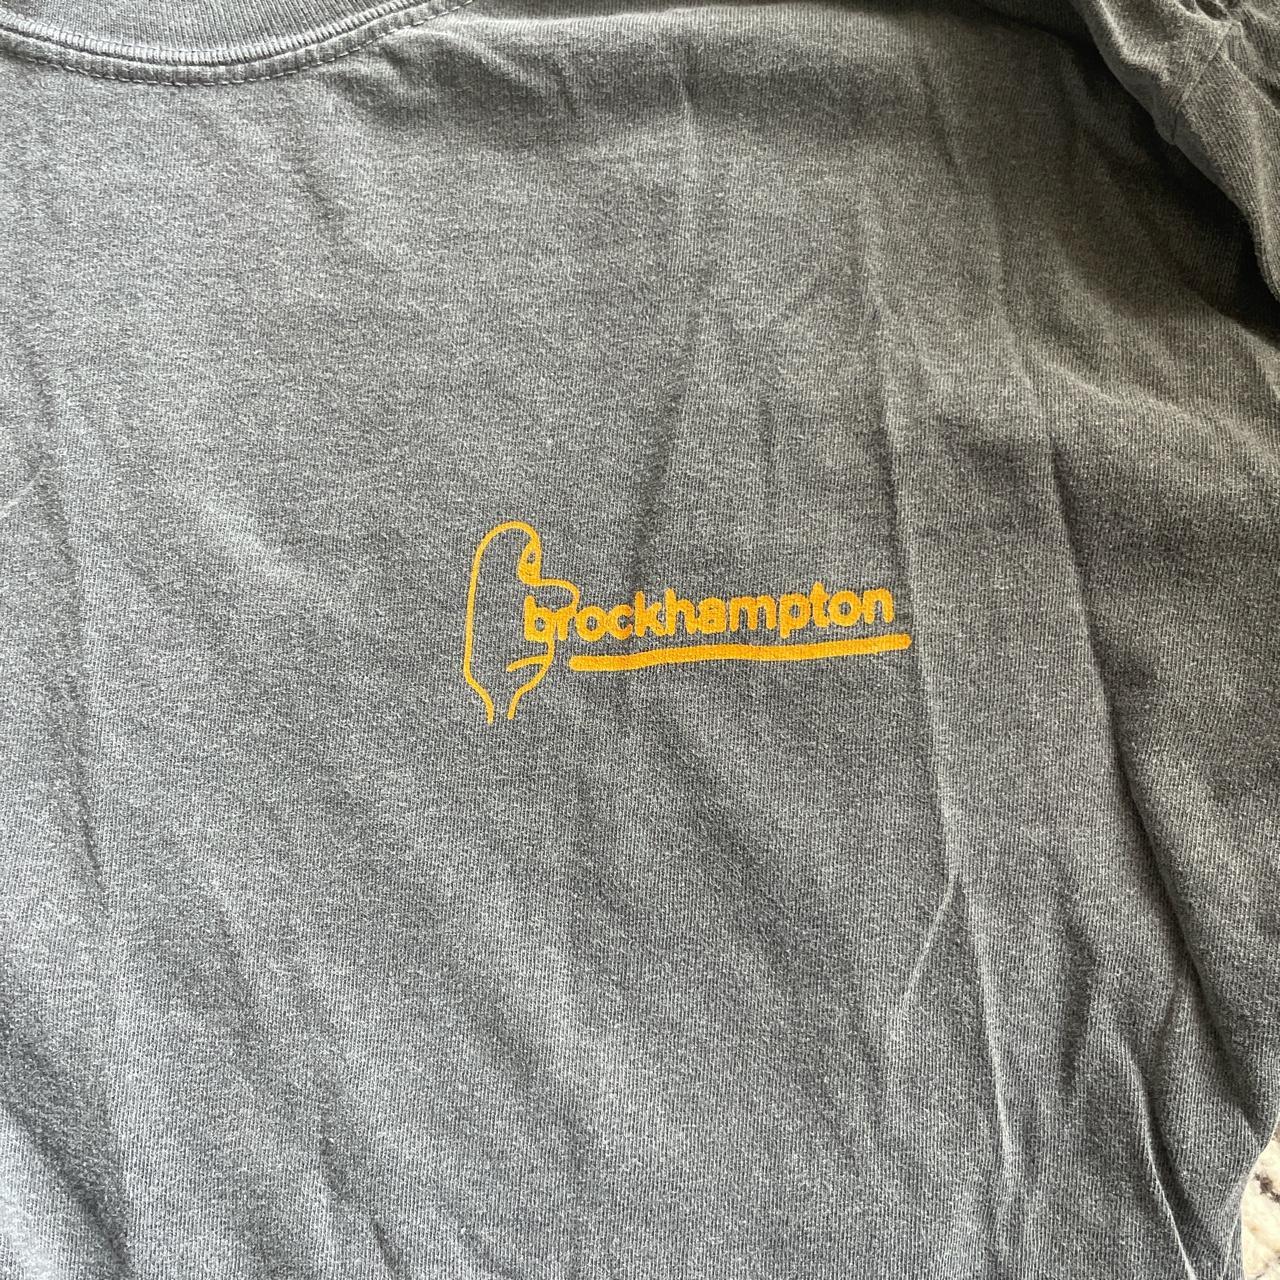 Brockhampton Men's Grey and Orange T-shirt (3)